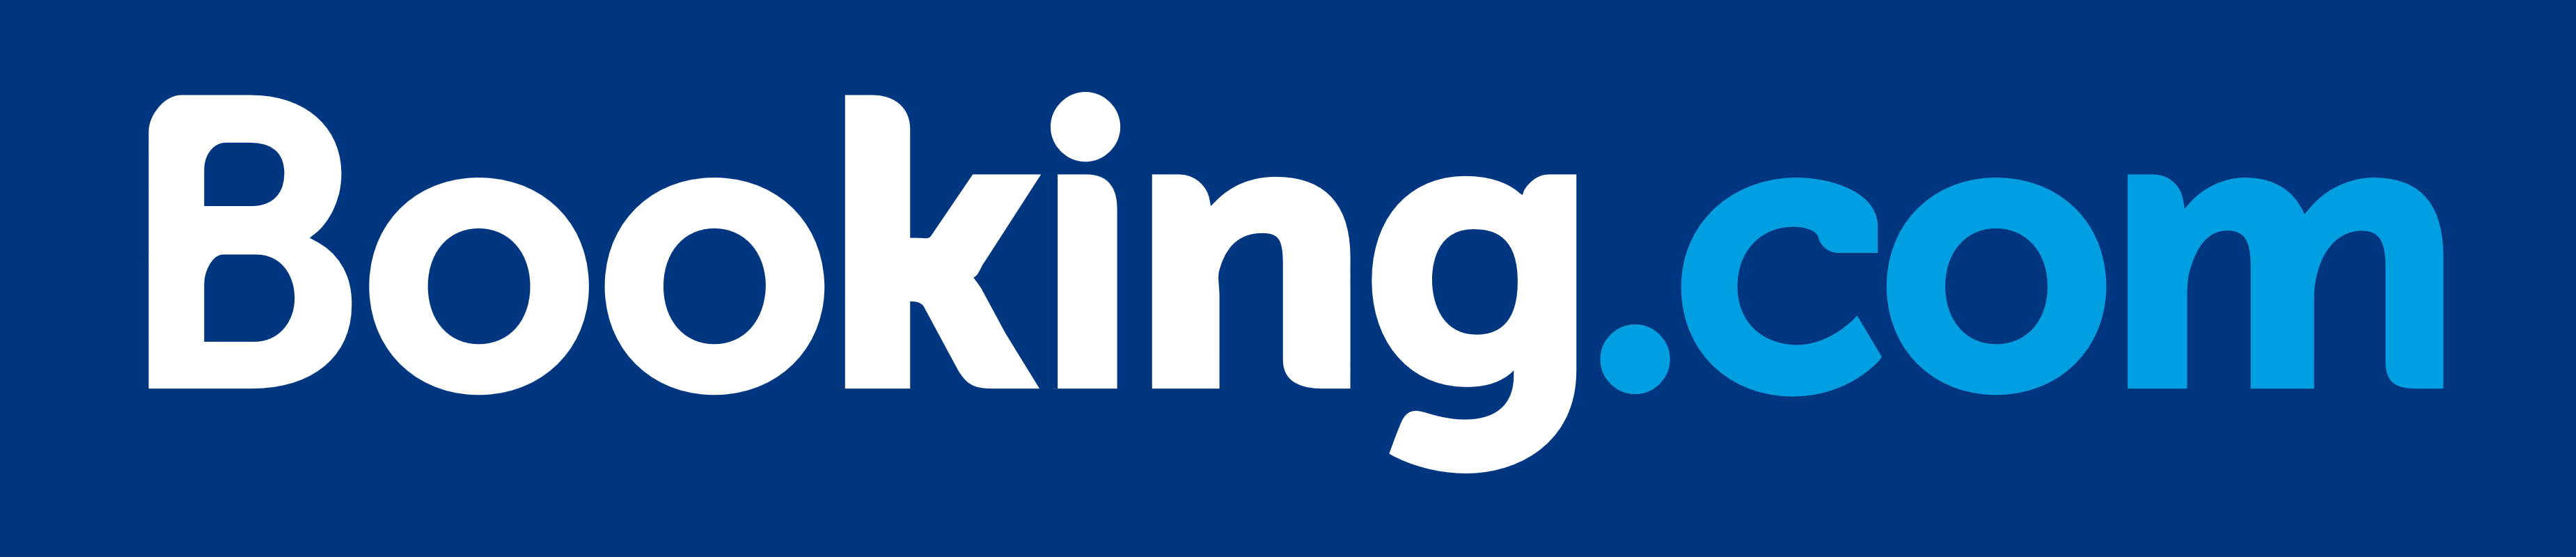 Icon booking. Букинг. Booking.com. Значок букинг. Booking.com logo.